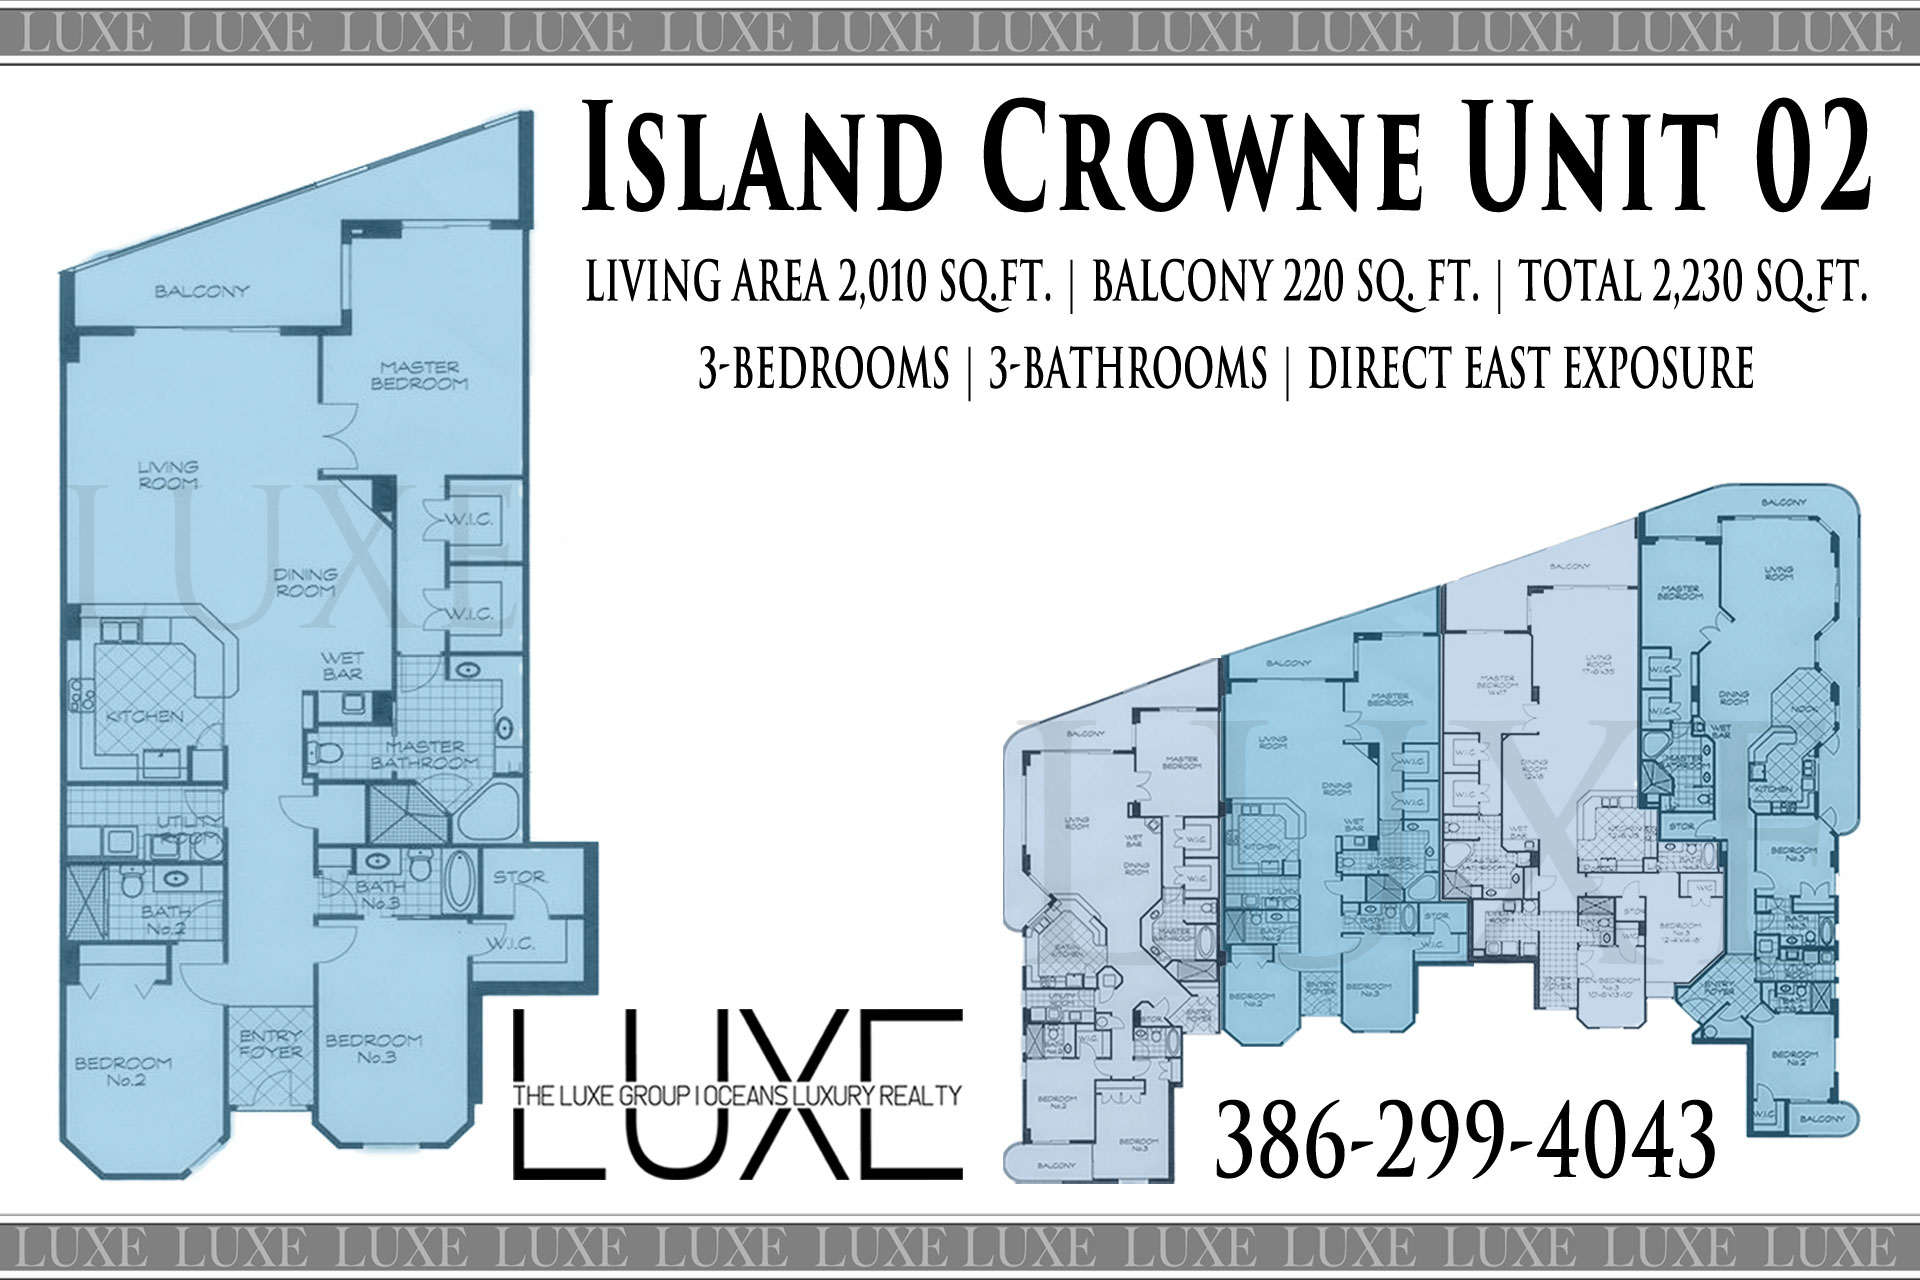 Island Crowne Condo Unit 02 Floor Plan B - 1900 N Atlantic Ave Daytona Beach, Florida - The LUXE Group at Oceans Luxury Realty 386-299-4043